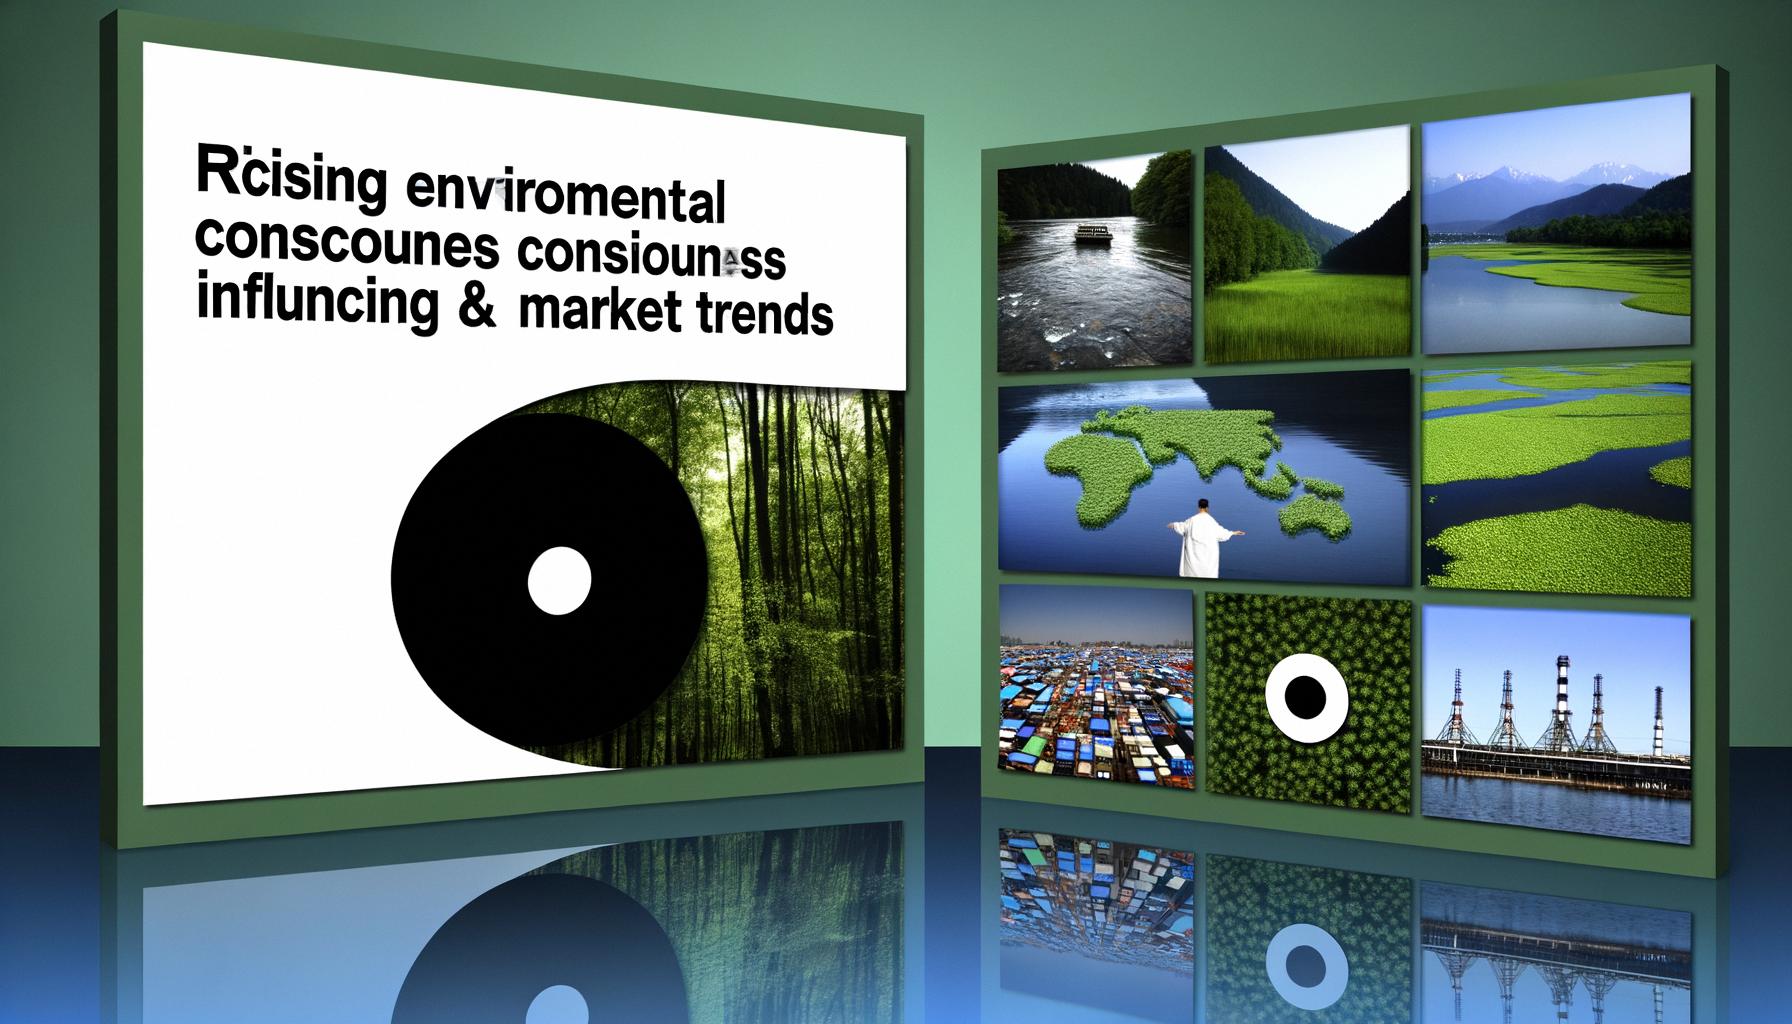 Source: https://heliumtrades.com/balanced-news/Rising-environmental-consciousness-impacts-market-trends